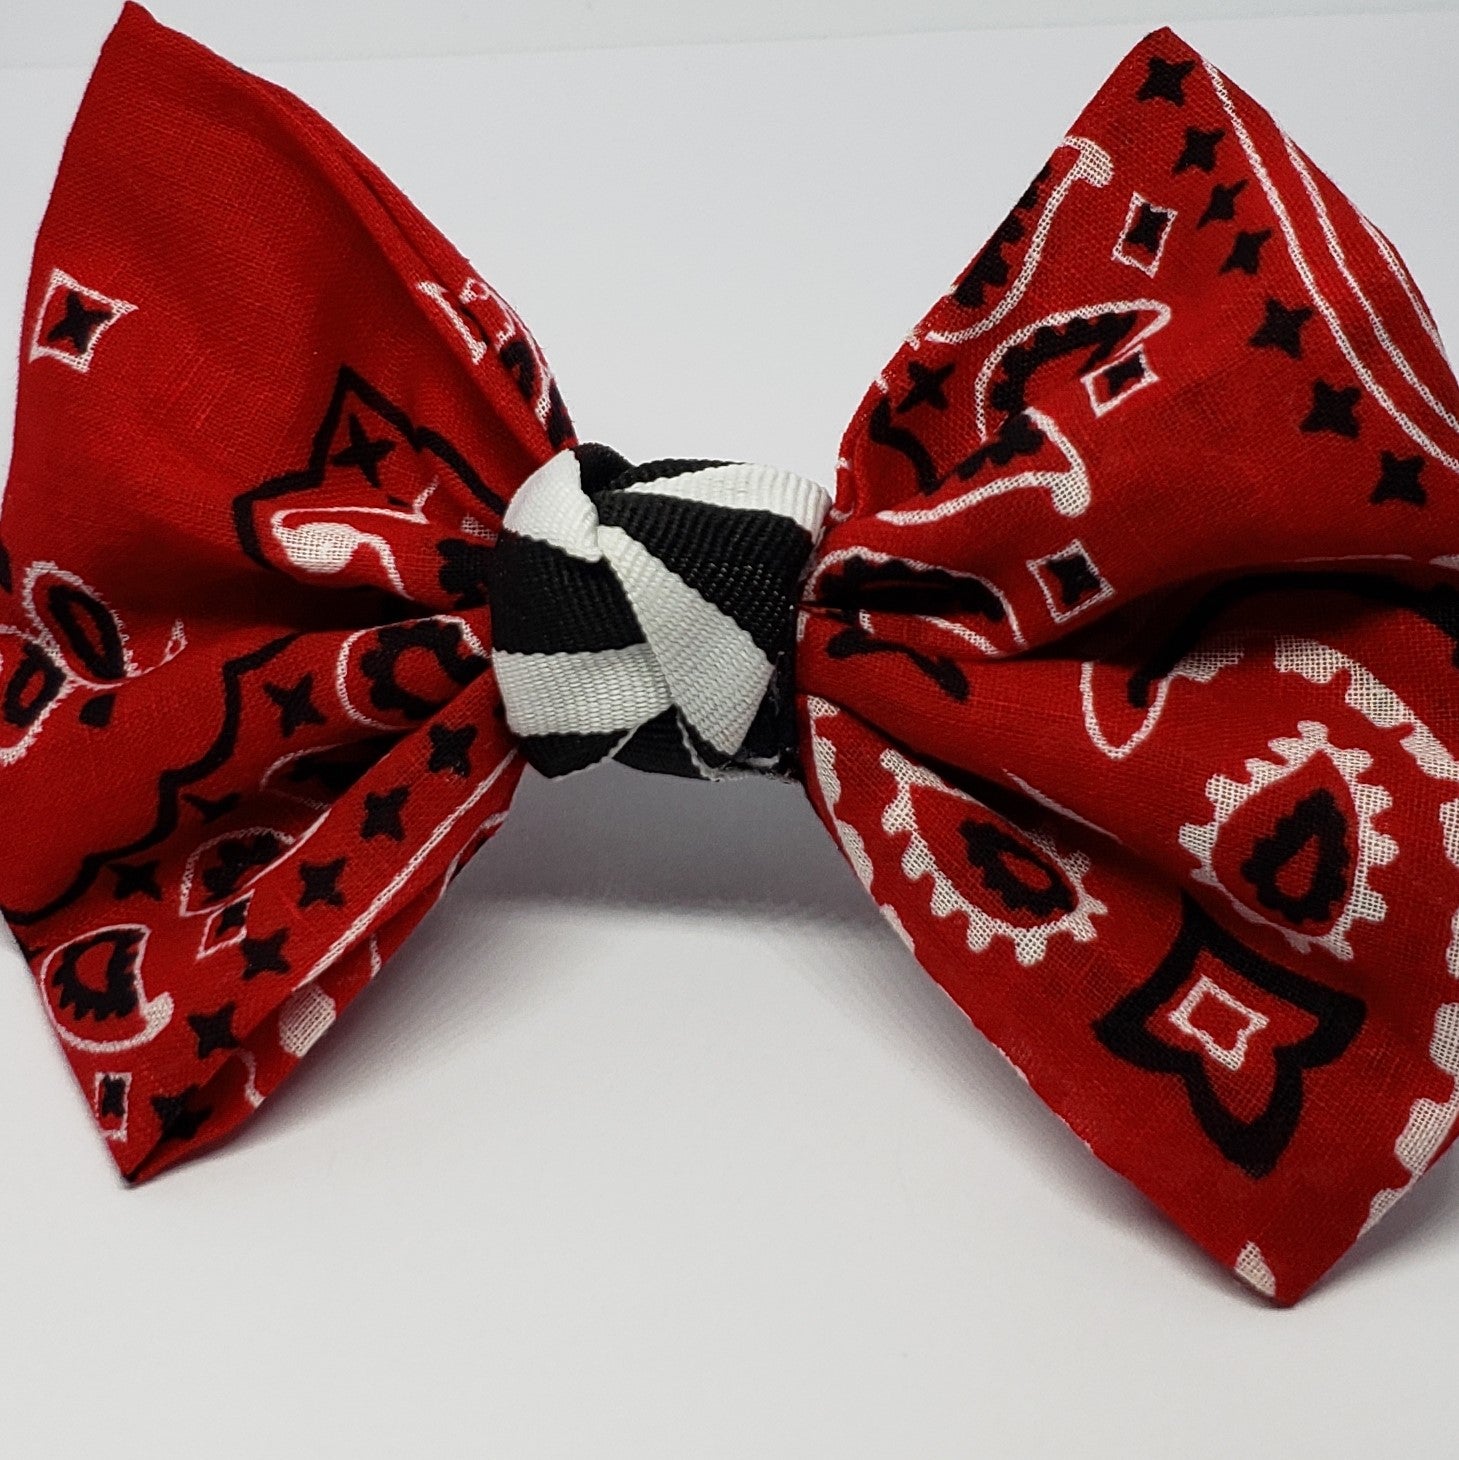 Victoriah Bandana Krazi Bow in Red, Black & White - Houzz of DVA Boutique